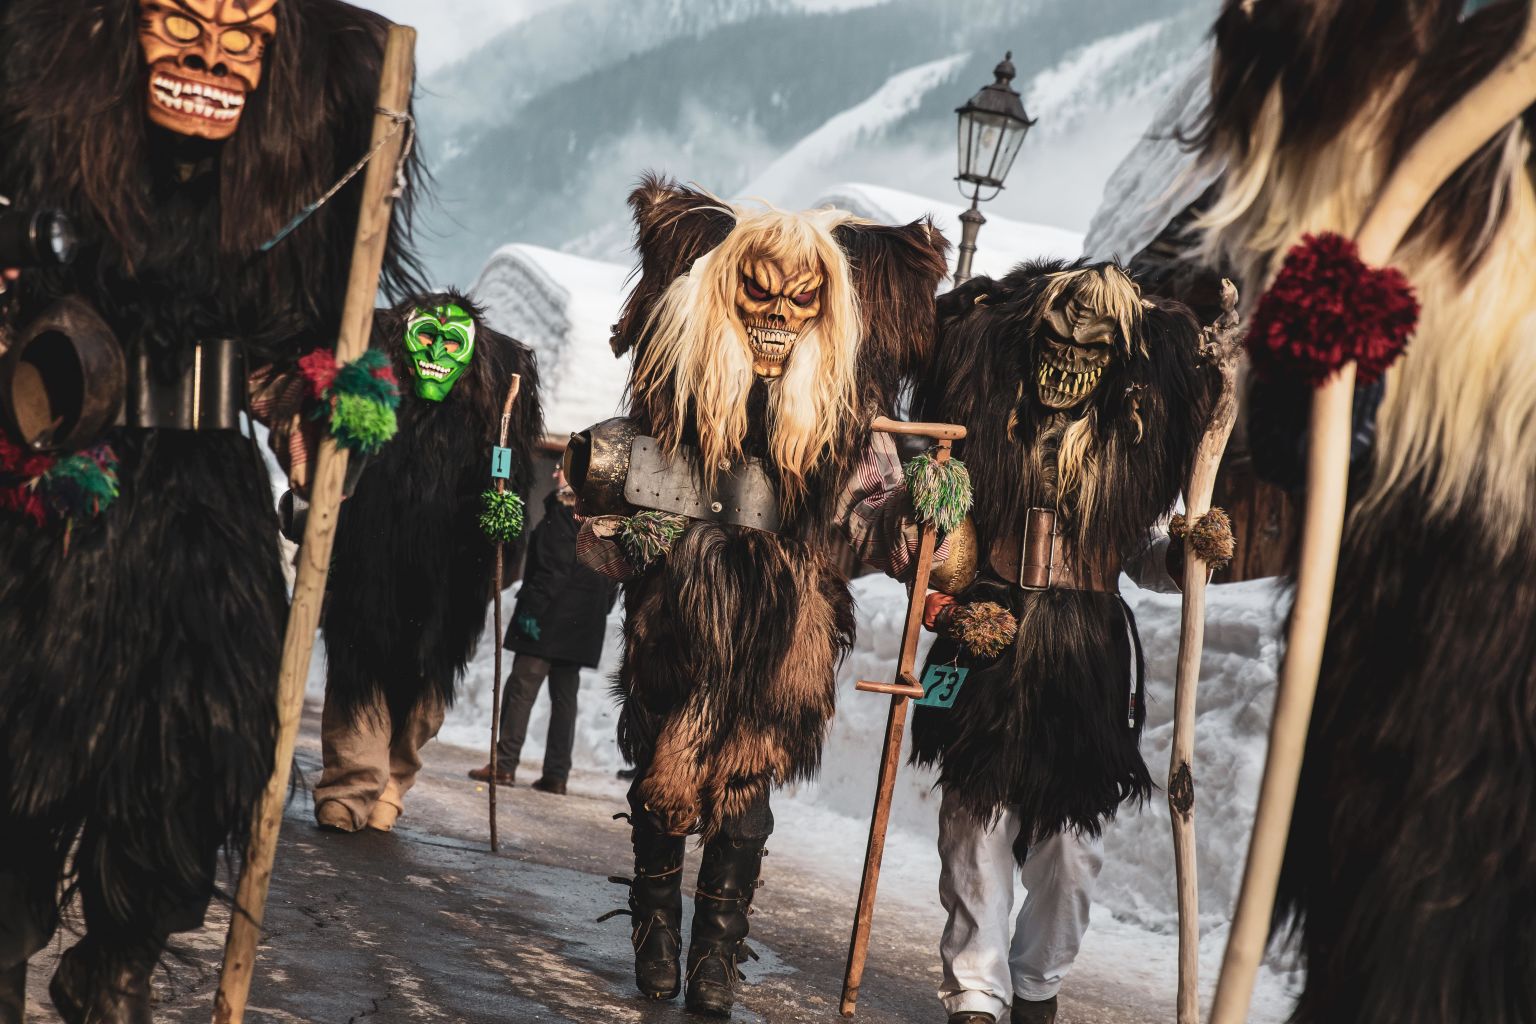 The masked carnival figures characteristic of Lötschental, the so-called Tschäggättä, carnival in Lötschental, Valais, Switzerland